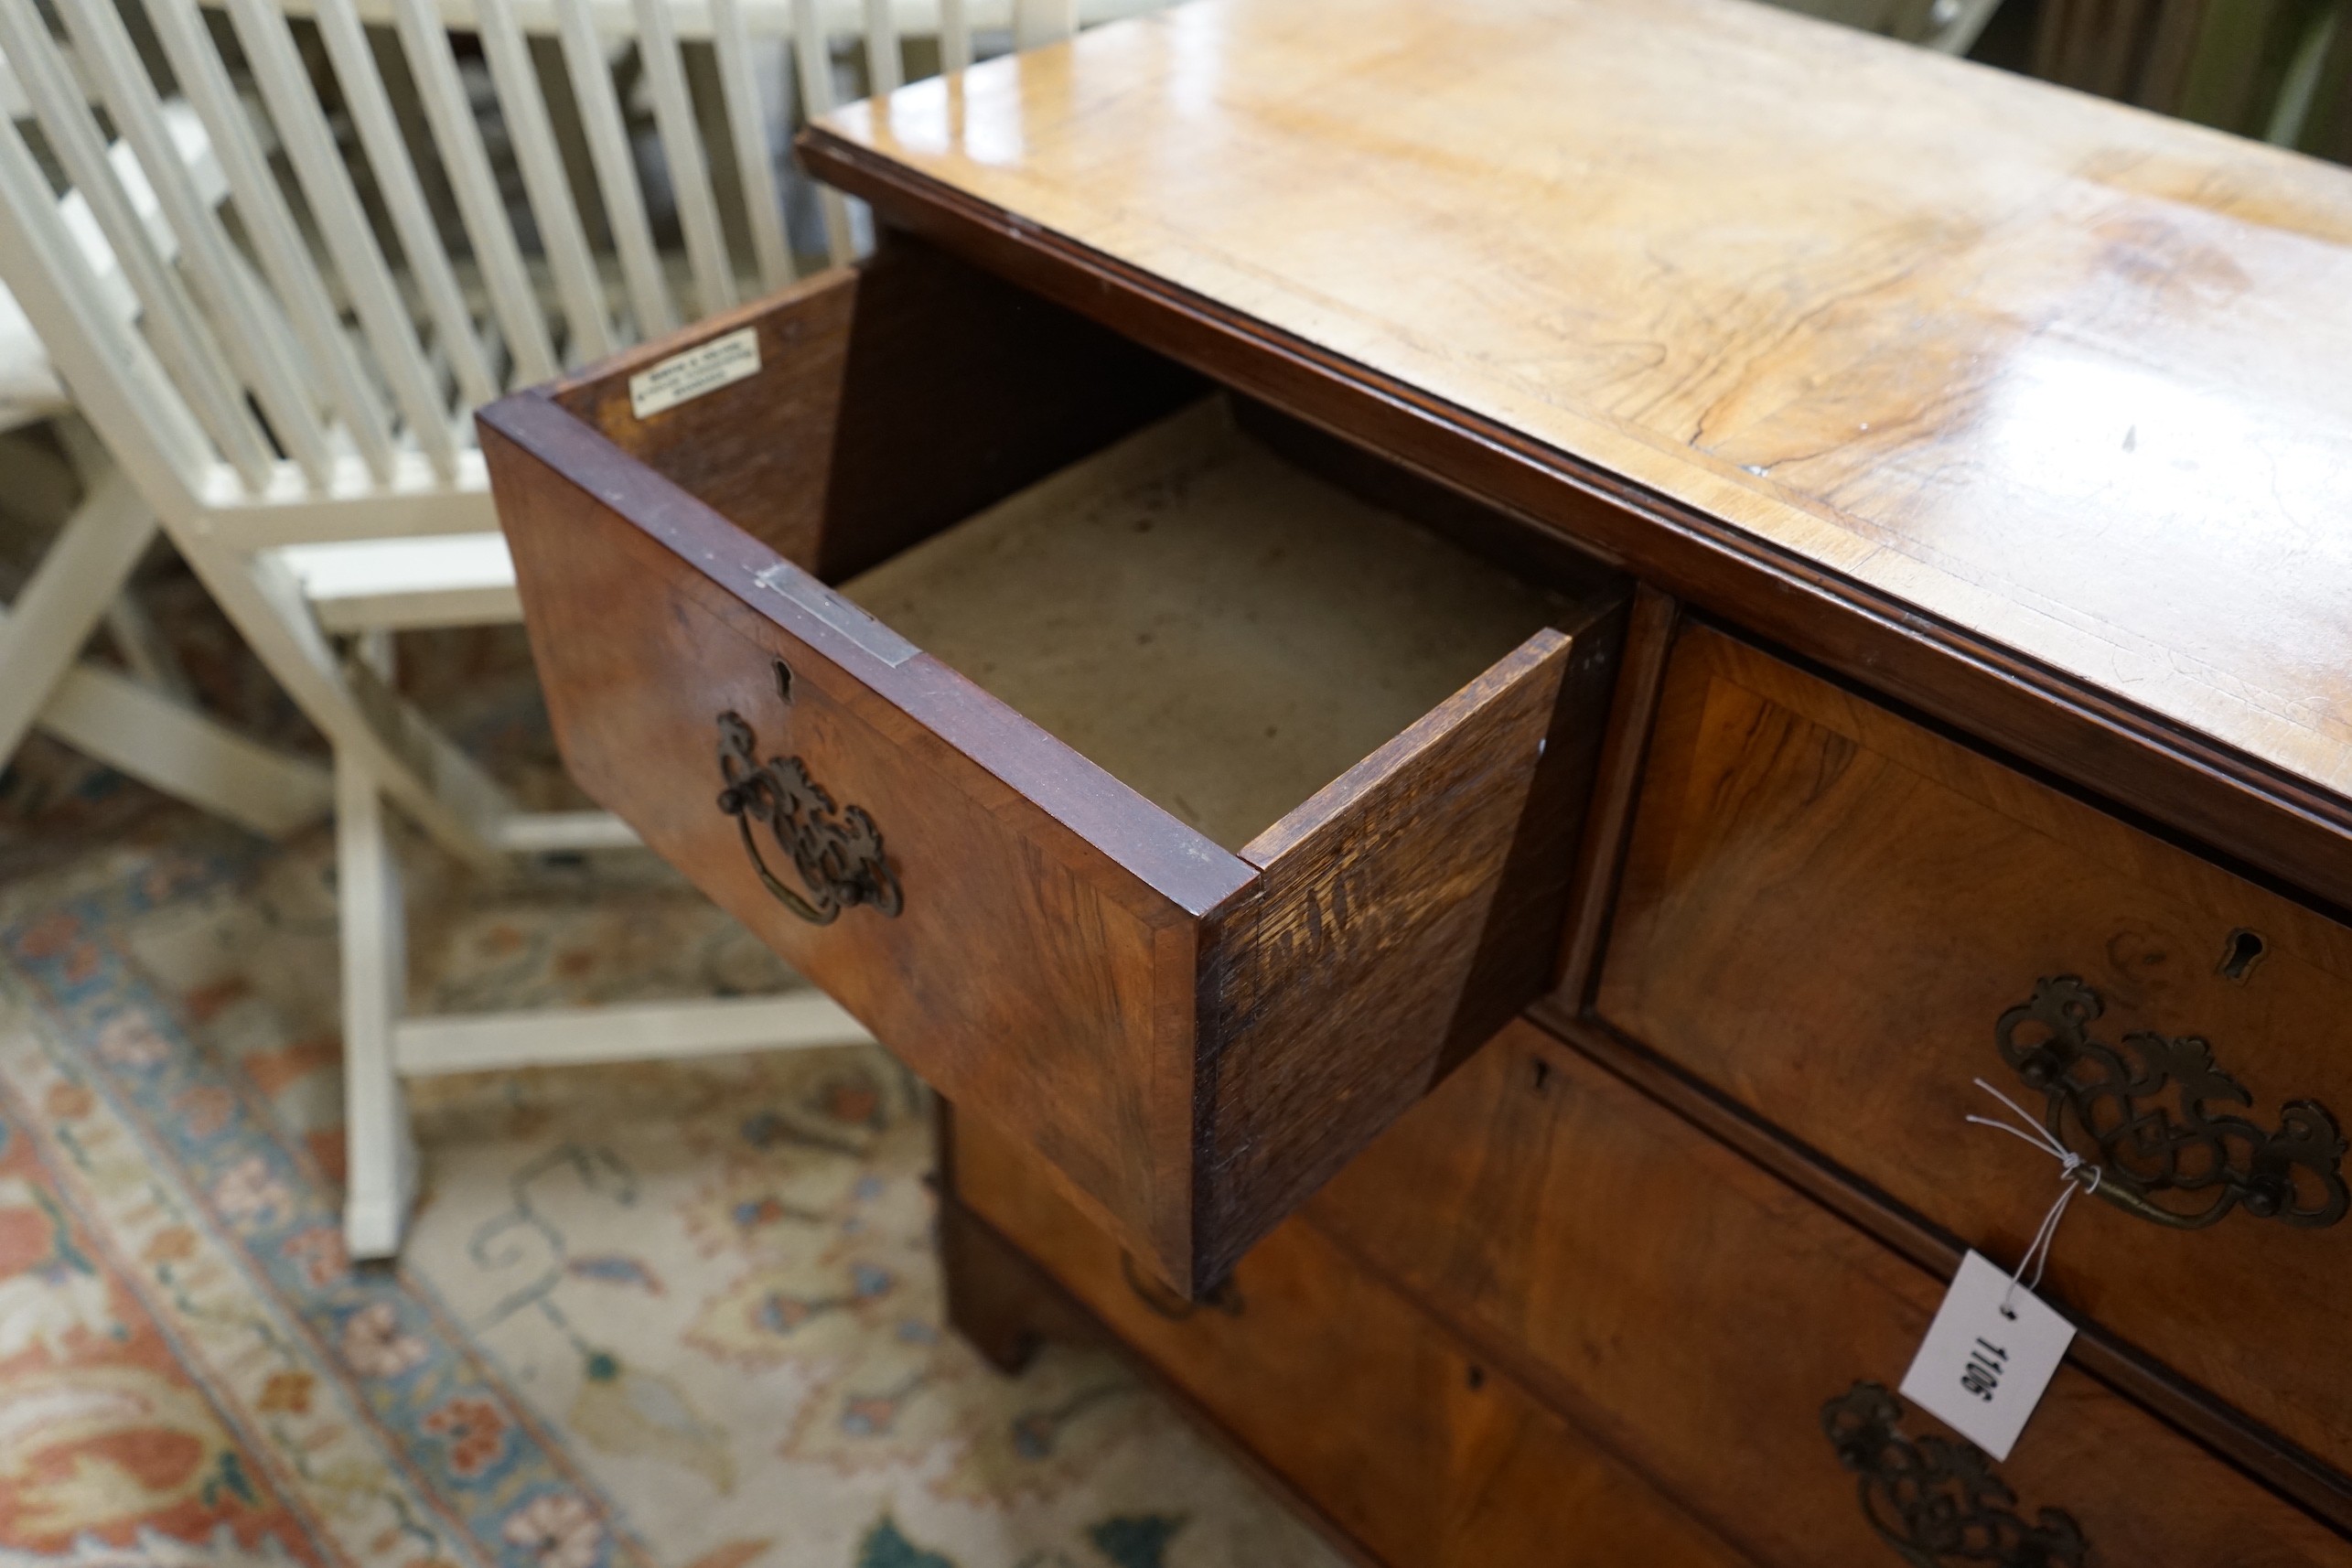 A small George II style walnut chest, width 76cm, depth 41cm, height 76cm